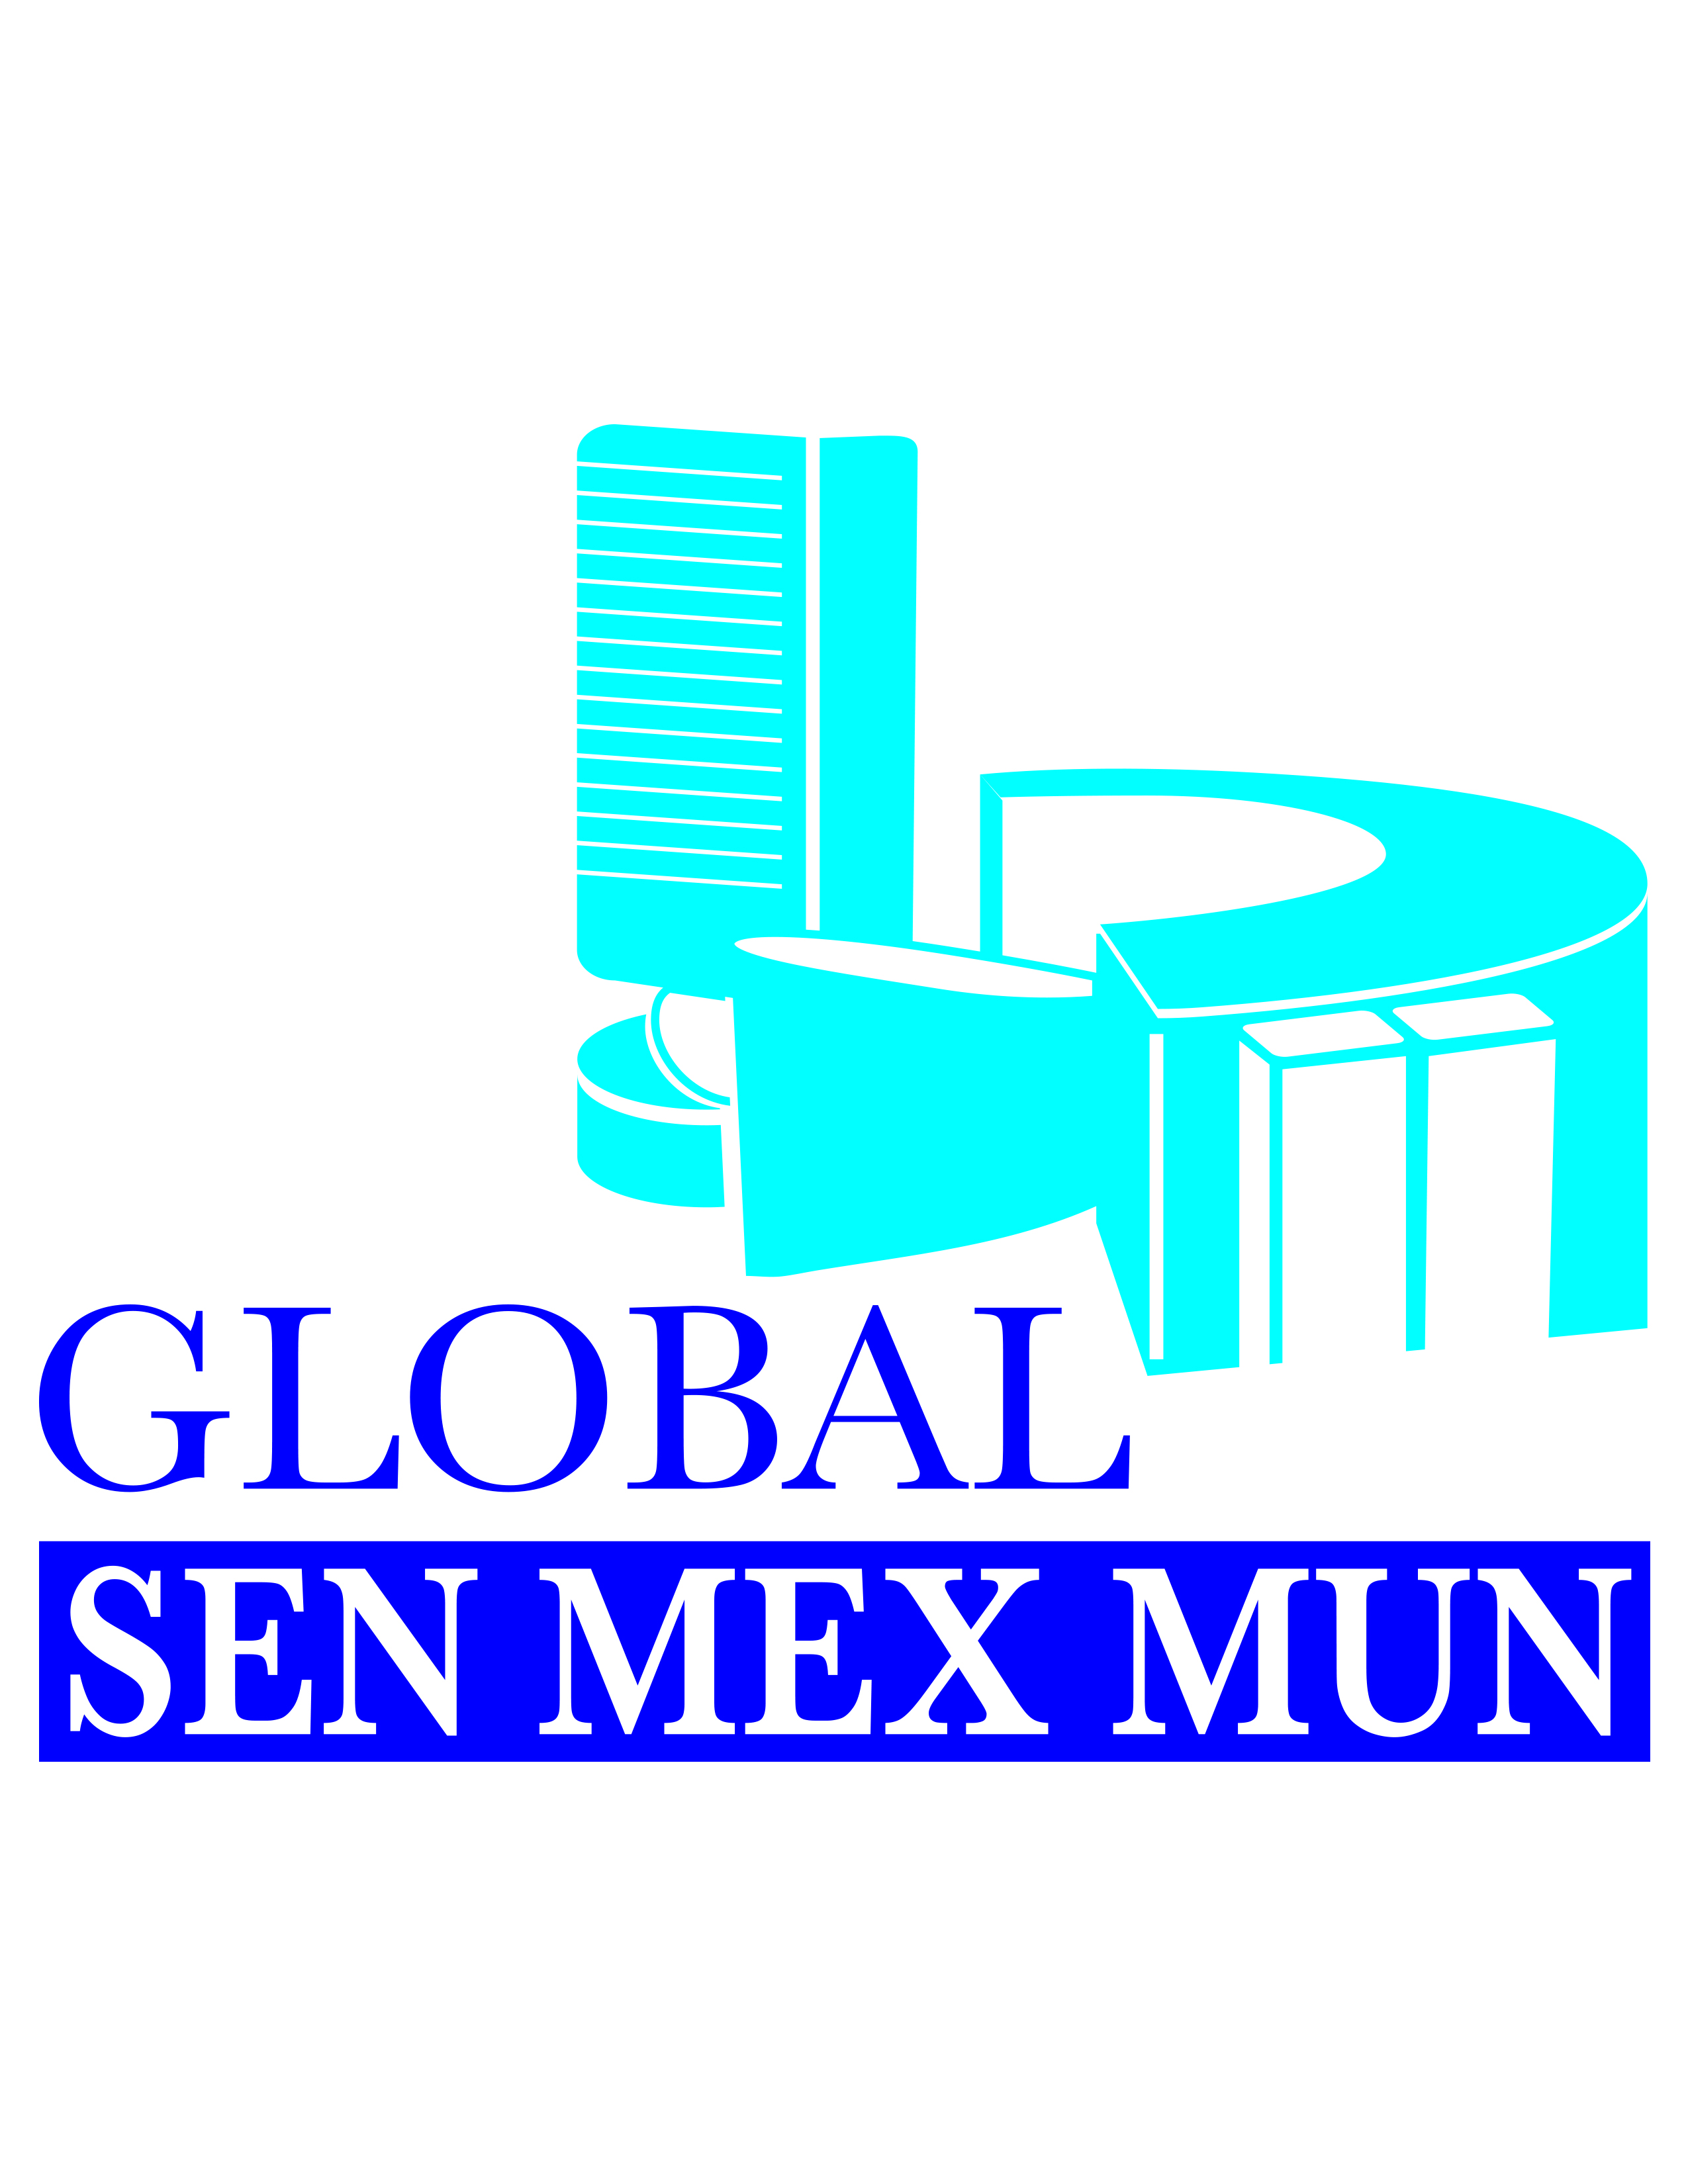 GLOBAL SEN MEX MUN 2018